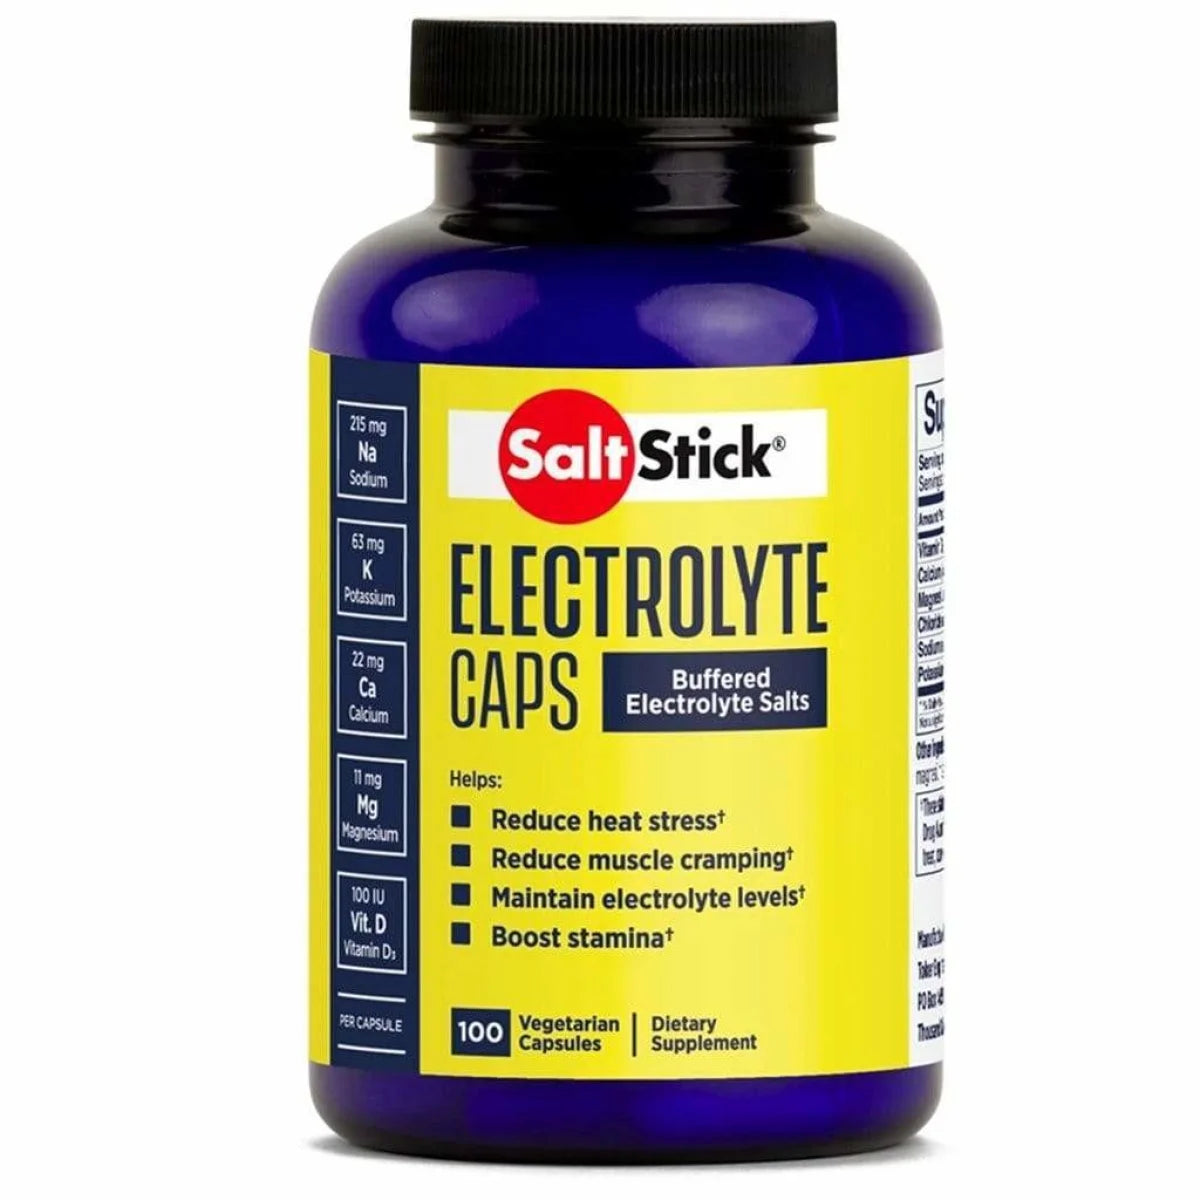 SaltStick Electrolyte Caps